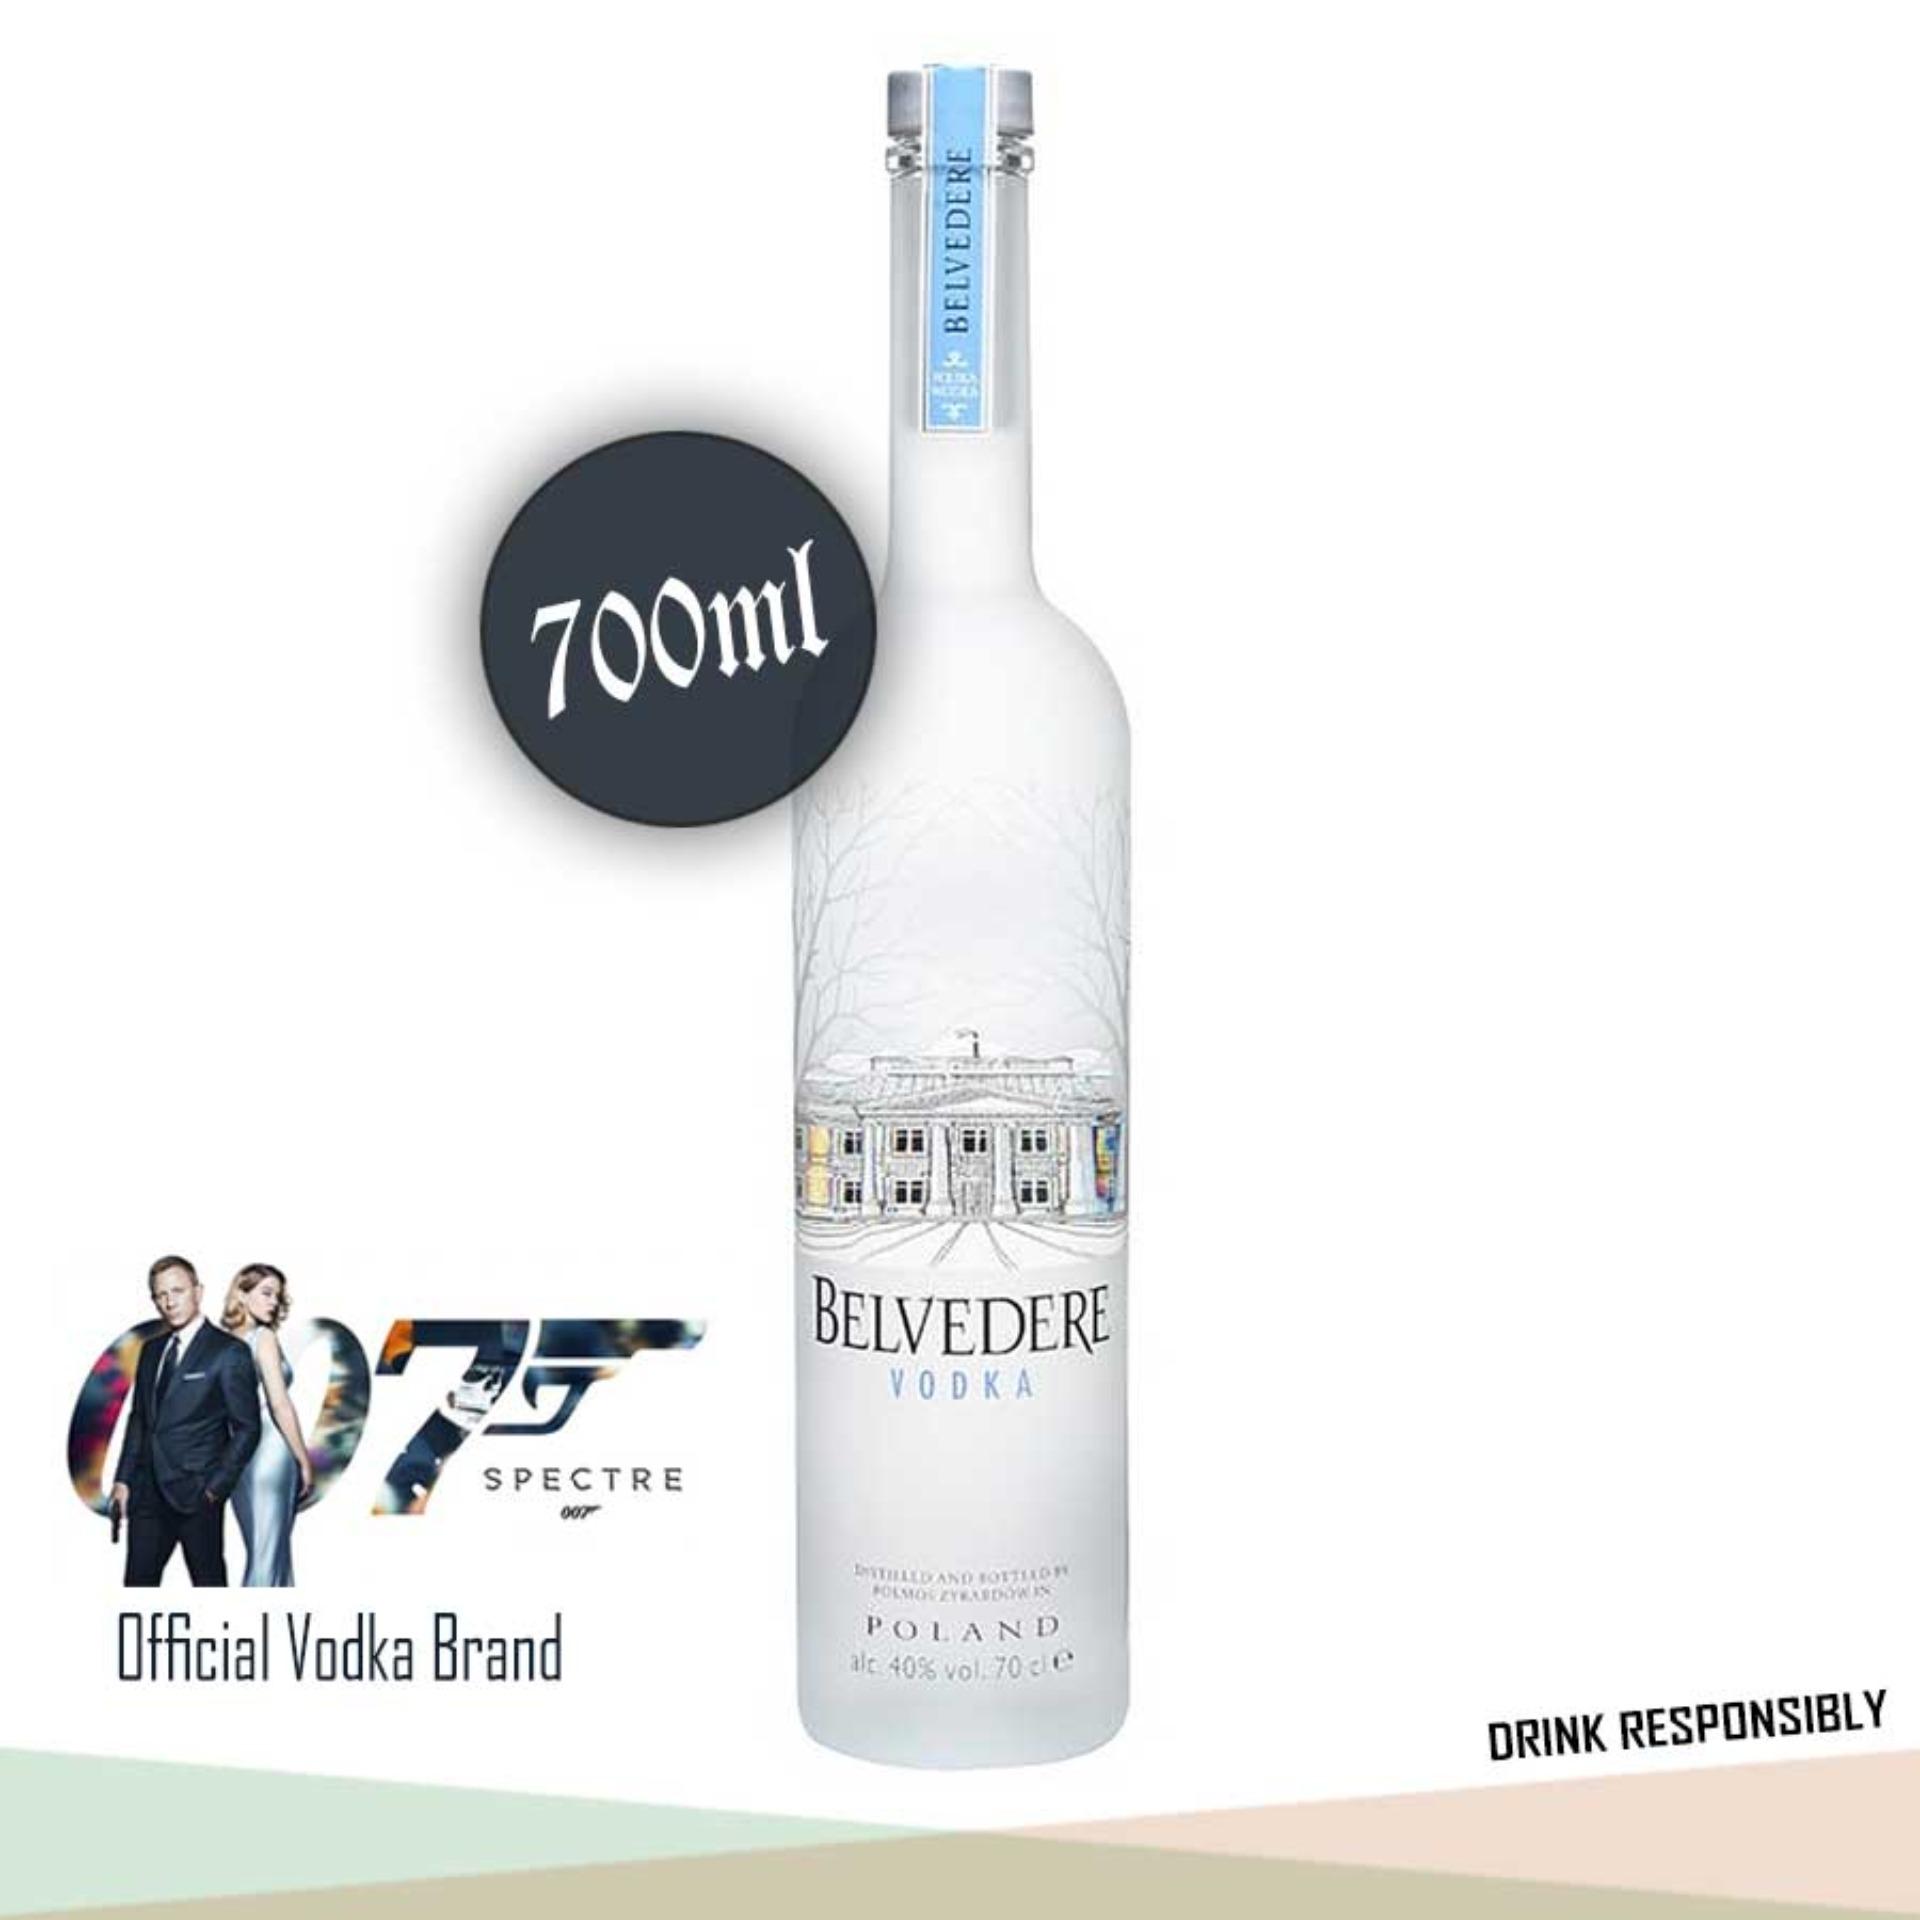 Belvedere Polish Vodka and James Bond Spectre DVD, 1 x 700ml